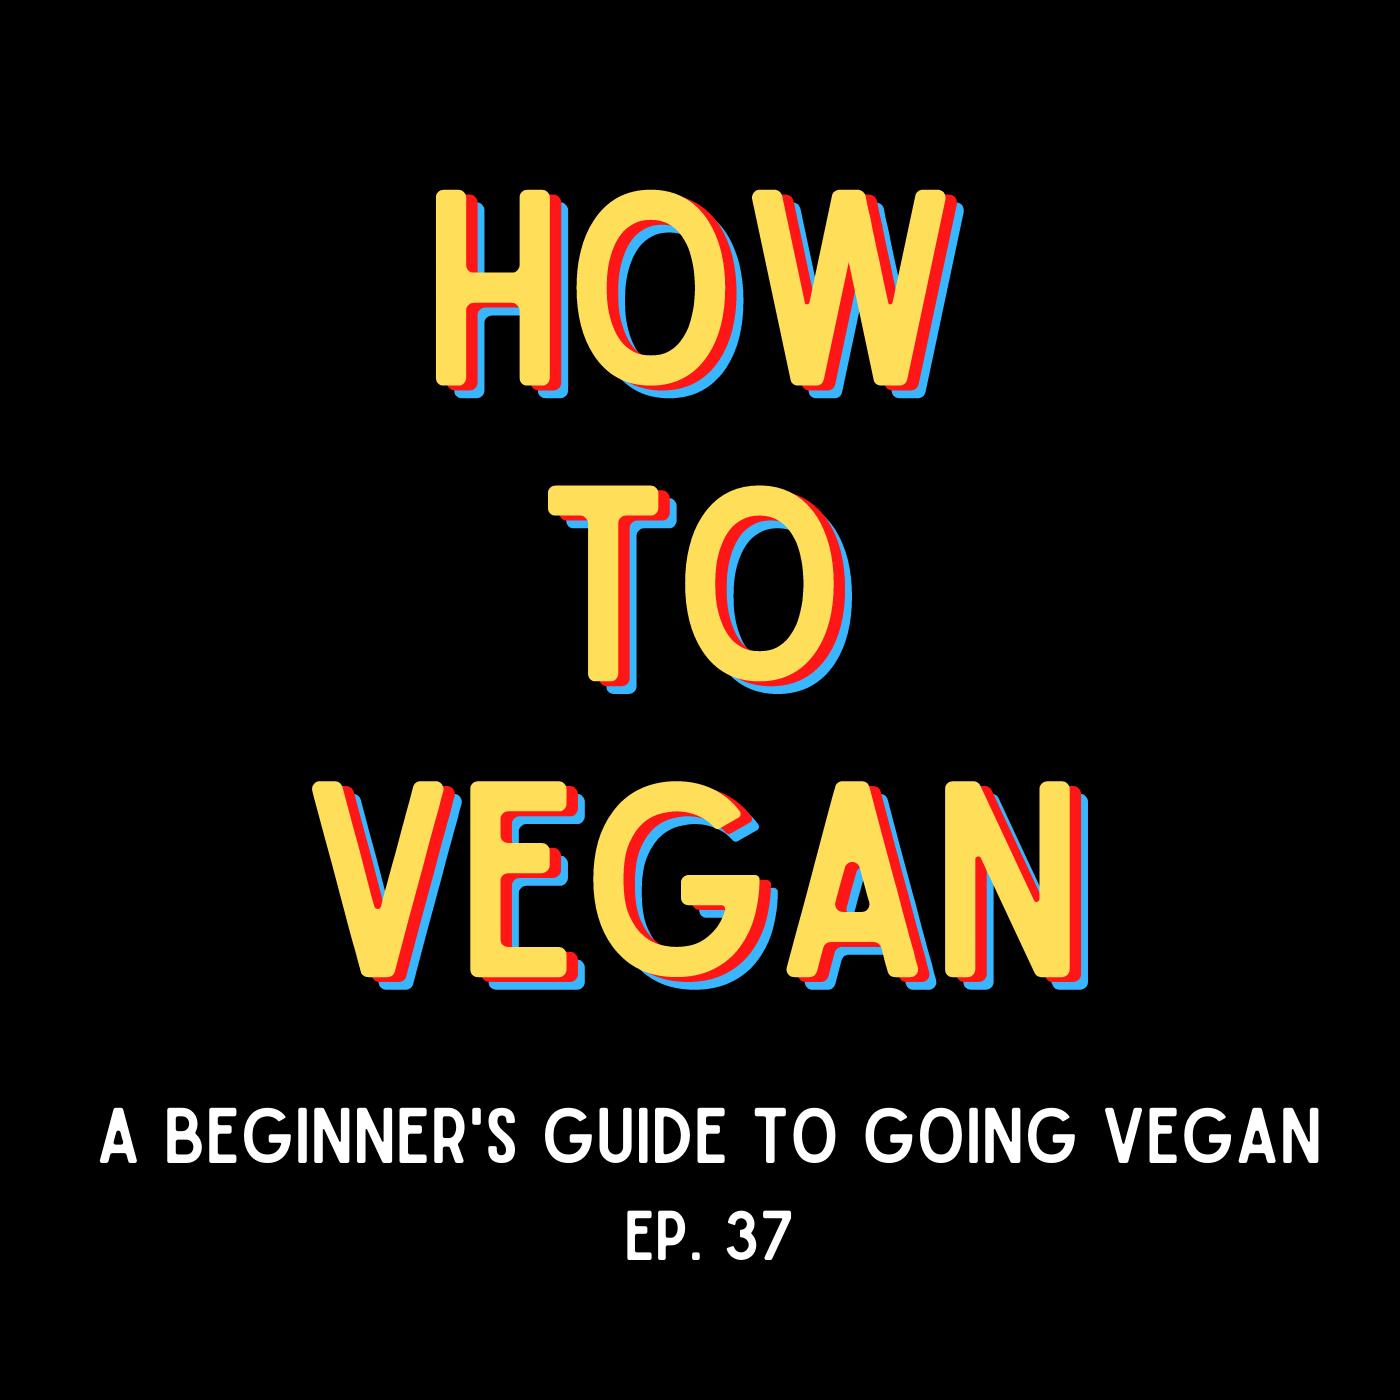 A Beginner's Guide To Going Vegan